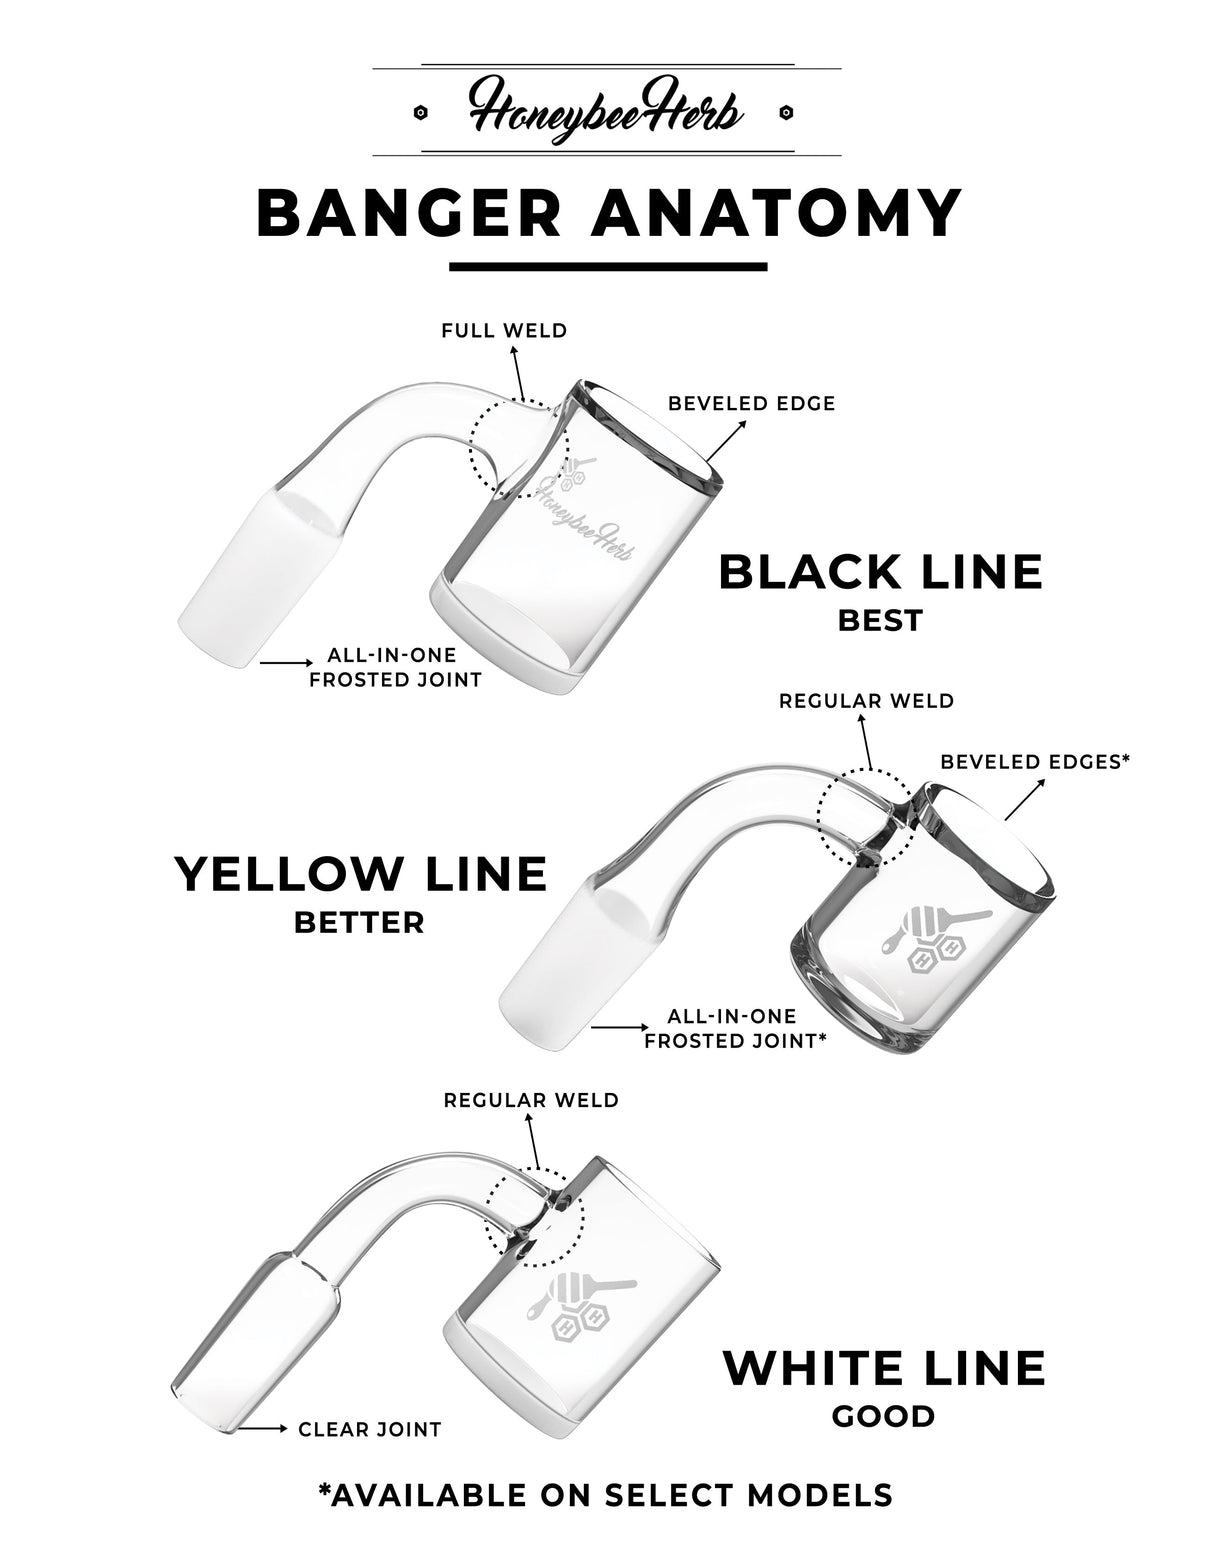 Honeybee Herb banger anatomy chart showing sidecar quartz banger variants for dab rigs